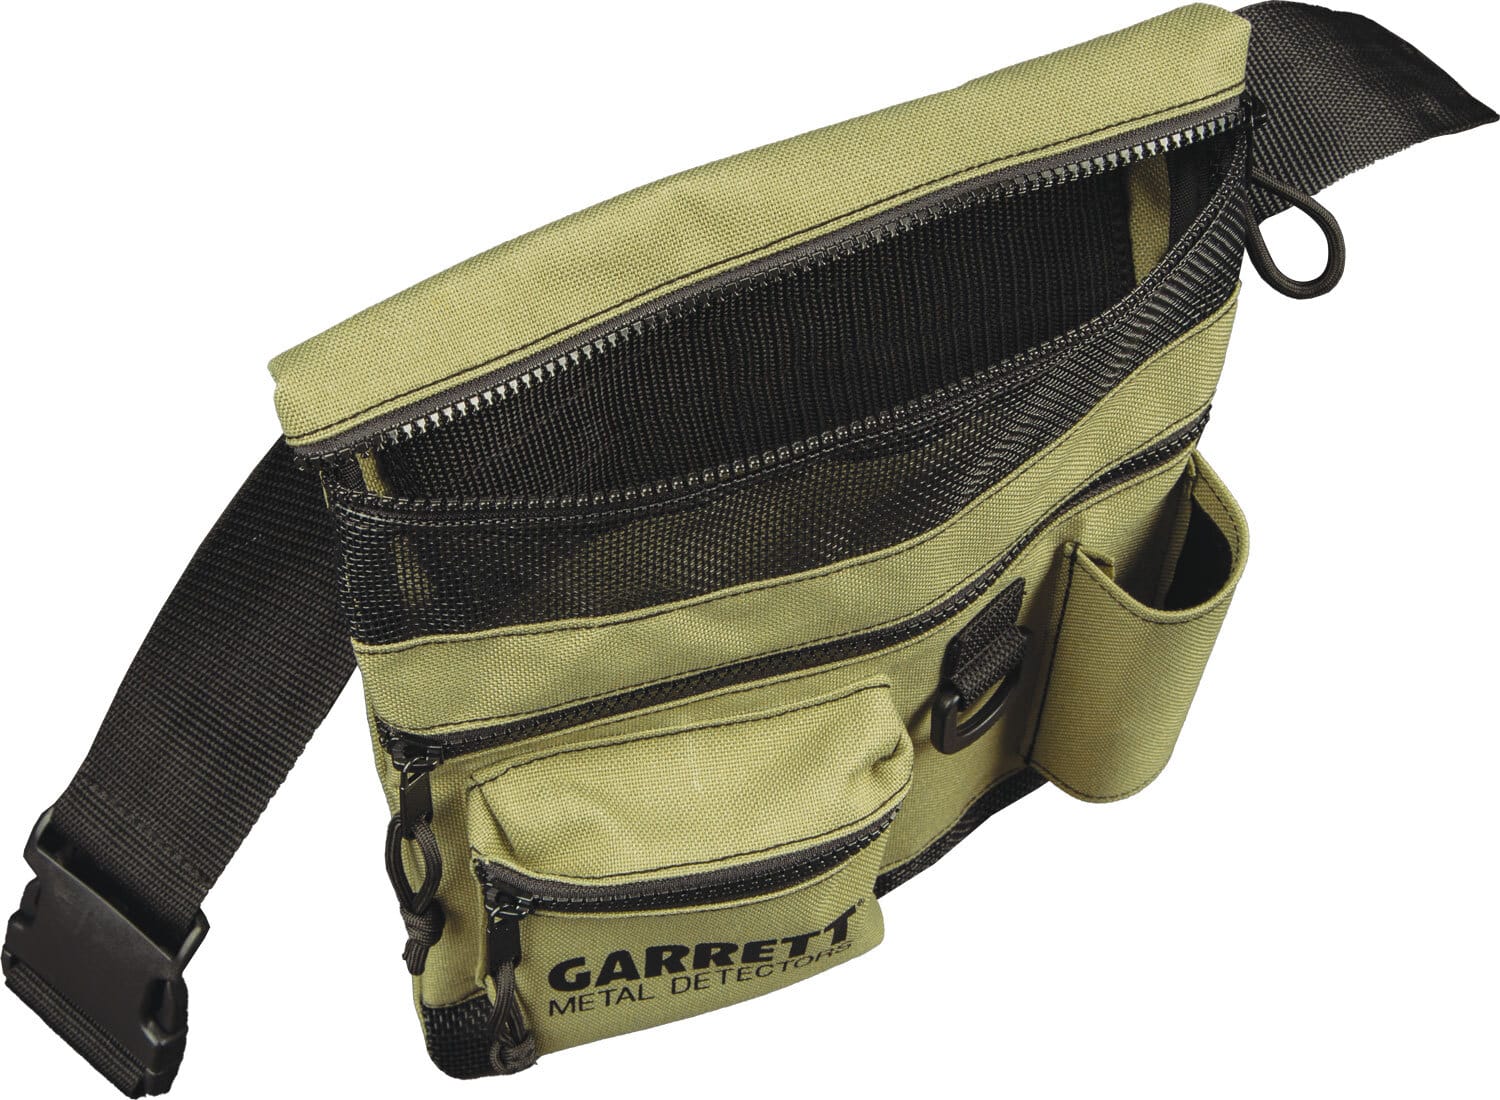 Garrett Soft Case Universal Digital Camo Detector Bag Kellyco